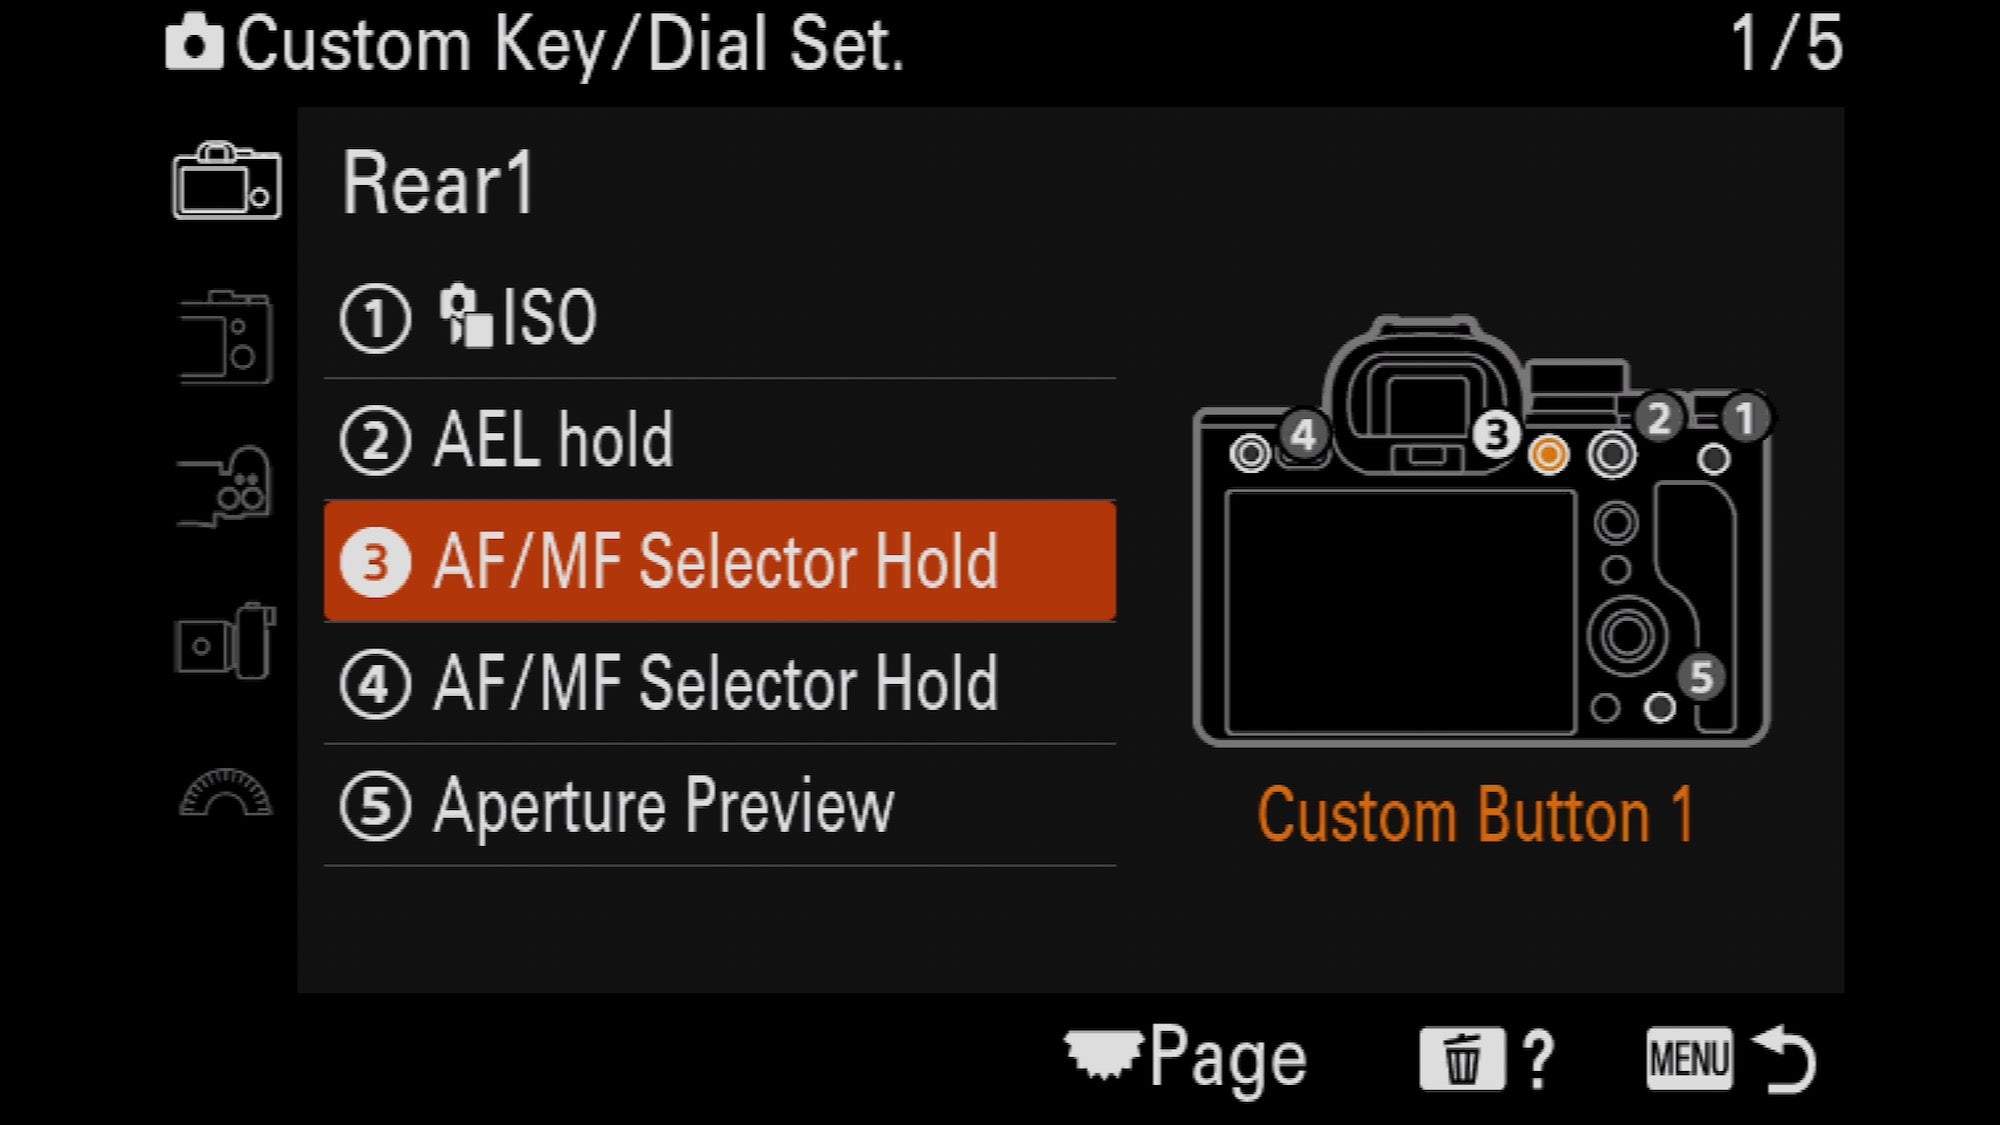 AF/MF Selector Hold Back Button Menu Settings